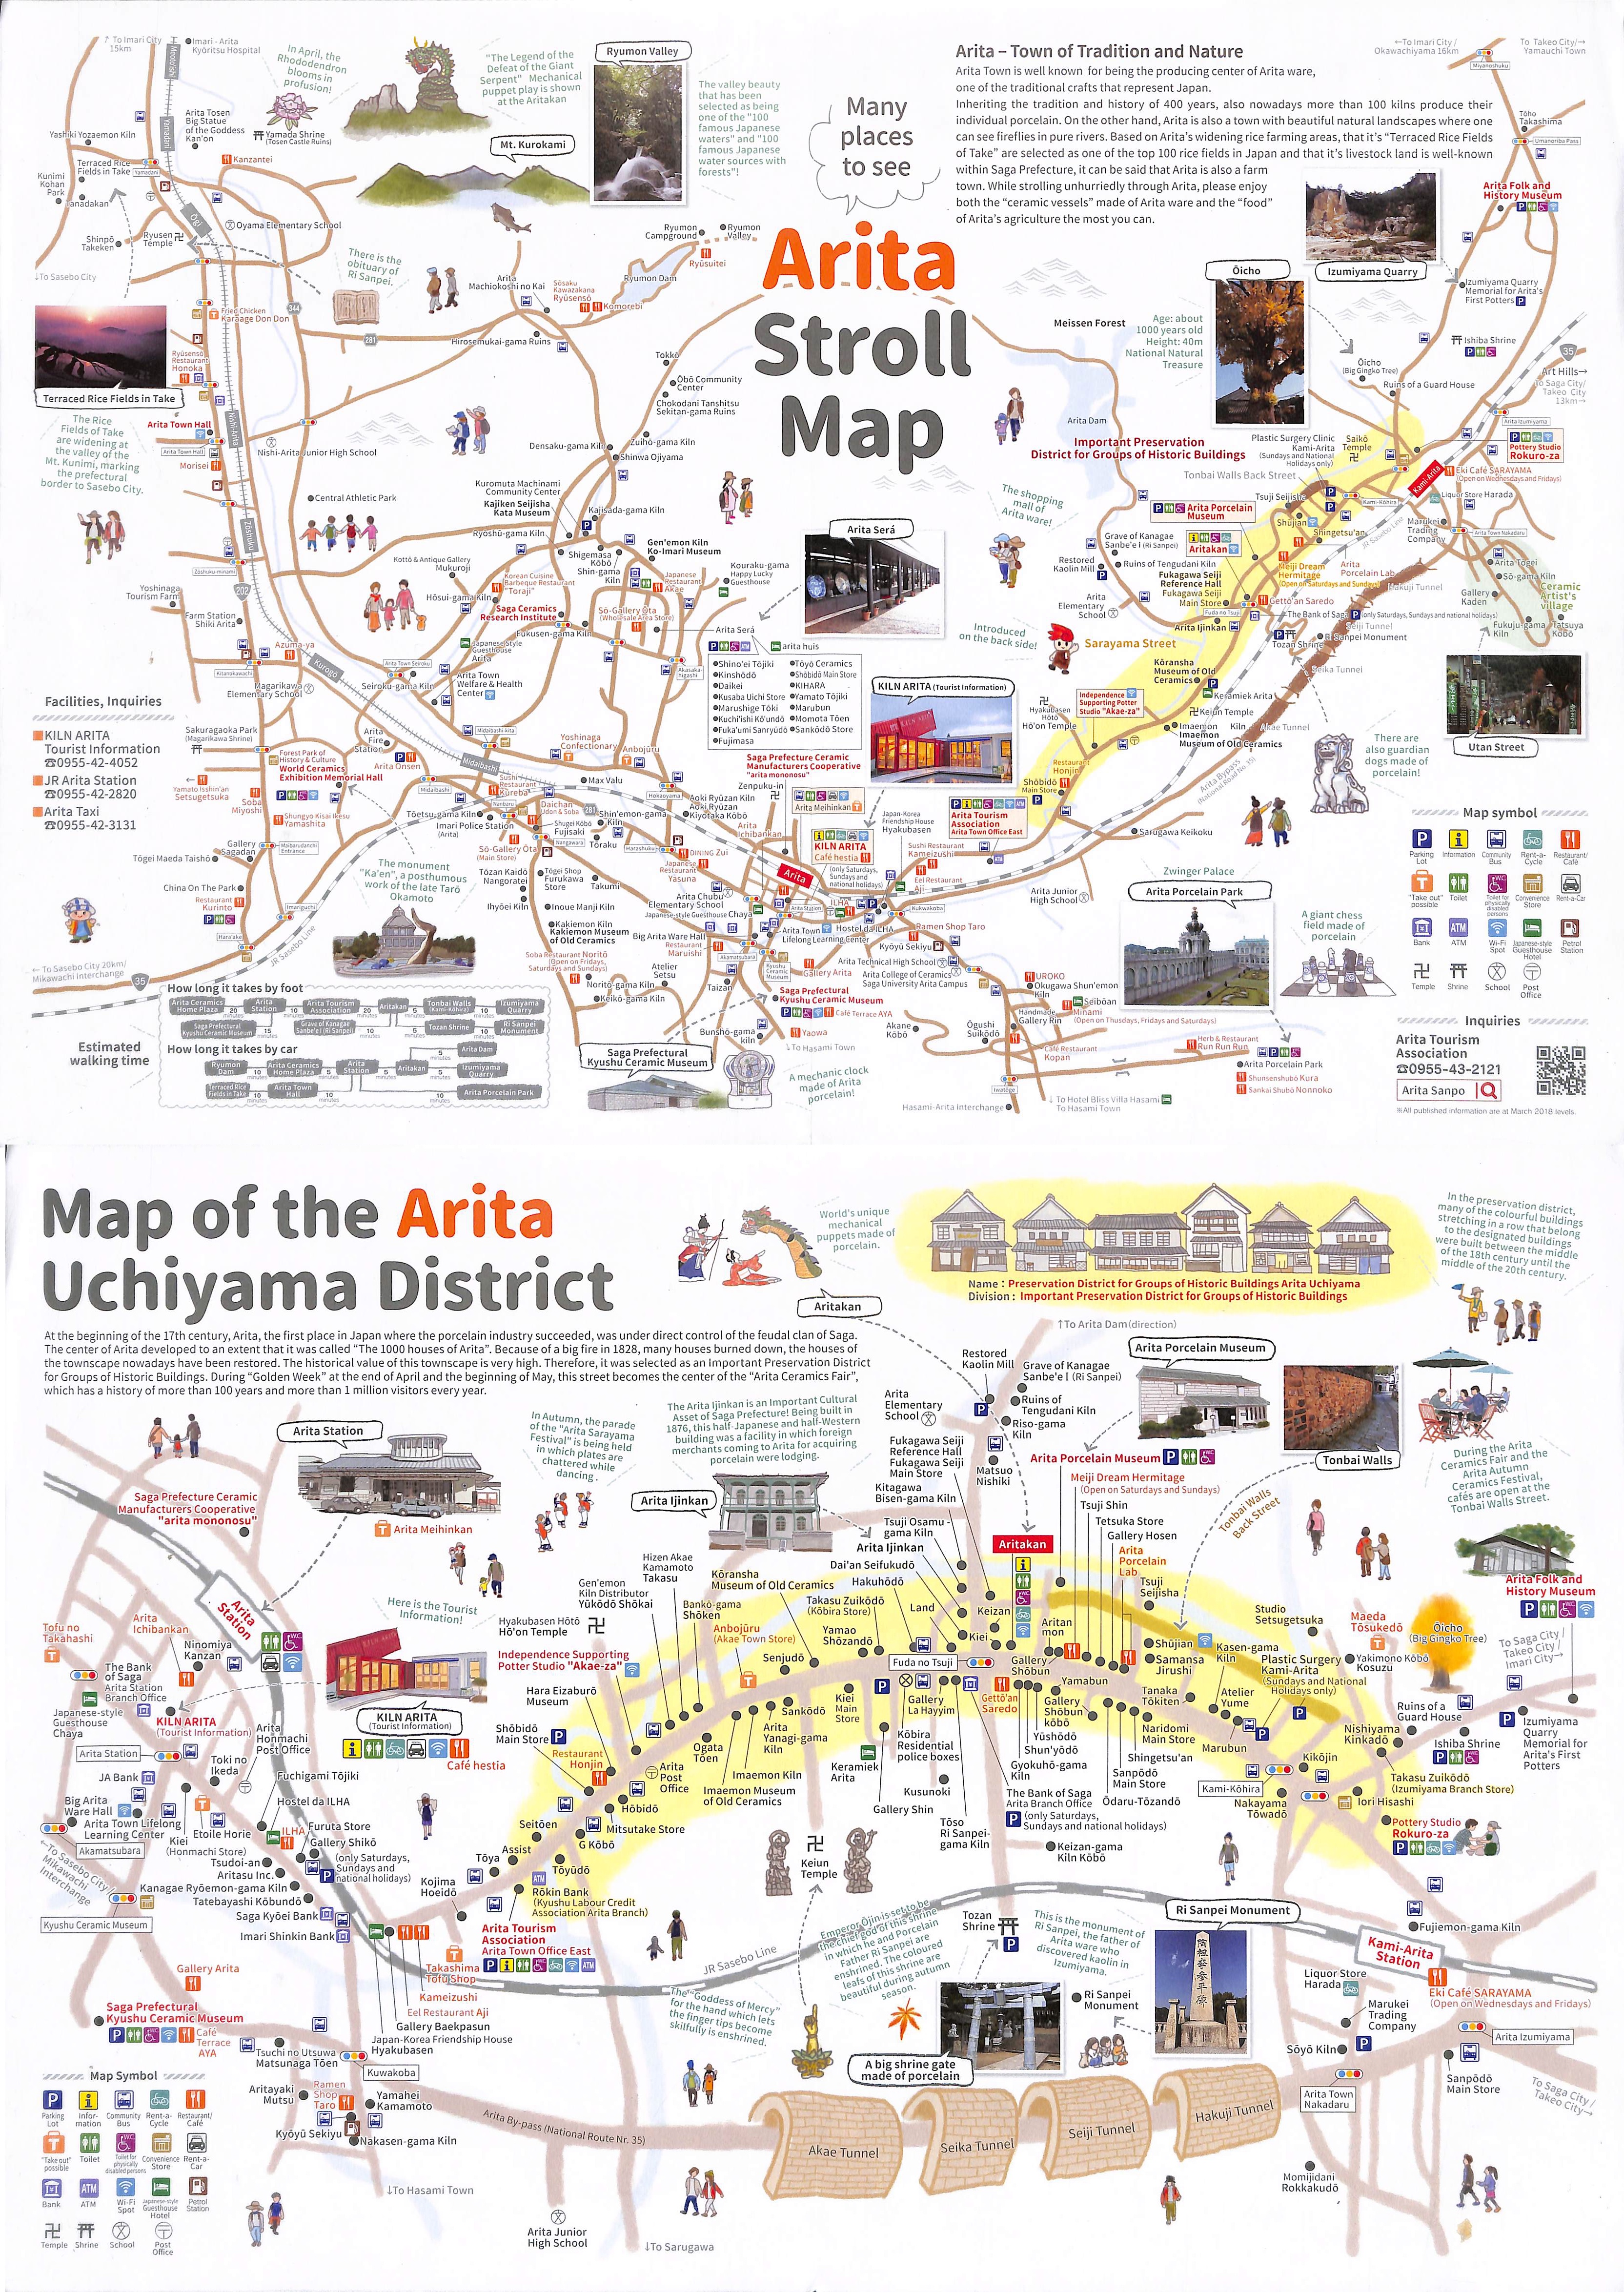 Arita Stroll Map